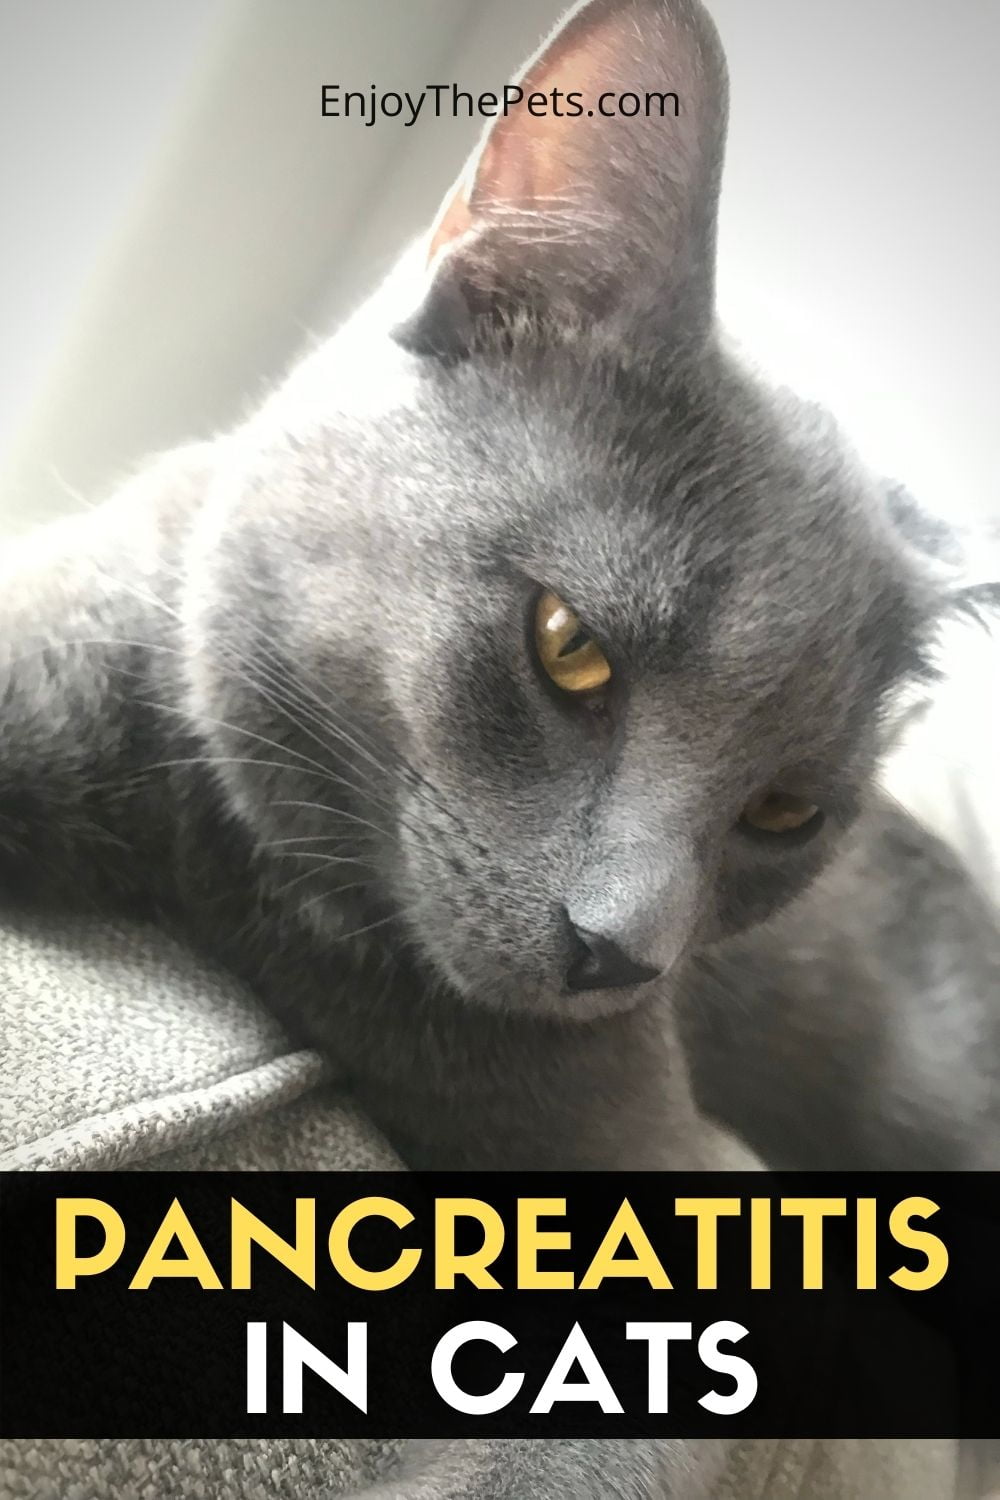 PANCREATITIS IN CATS